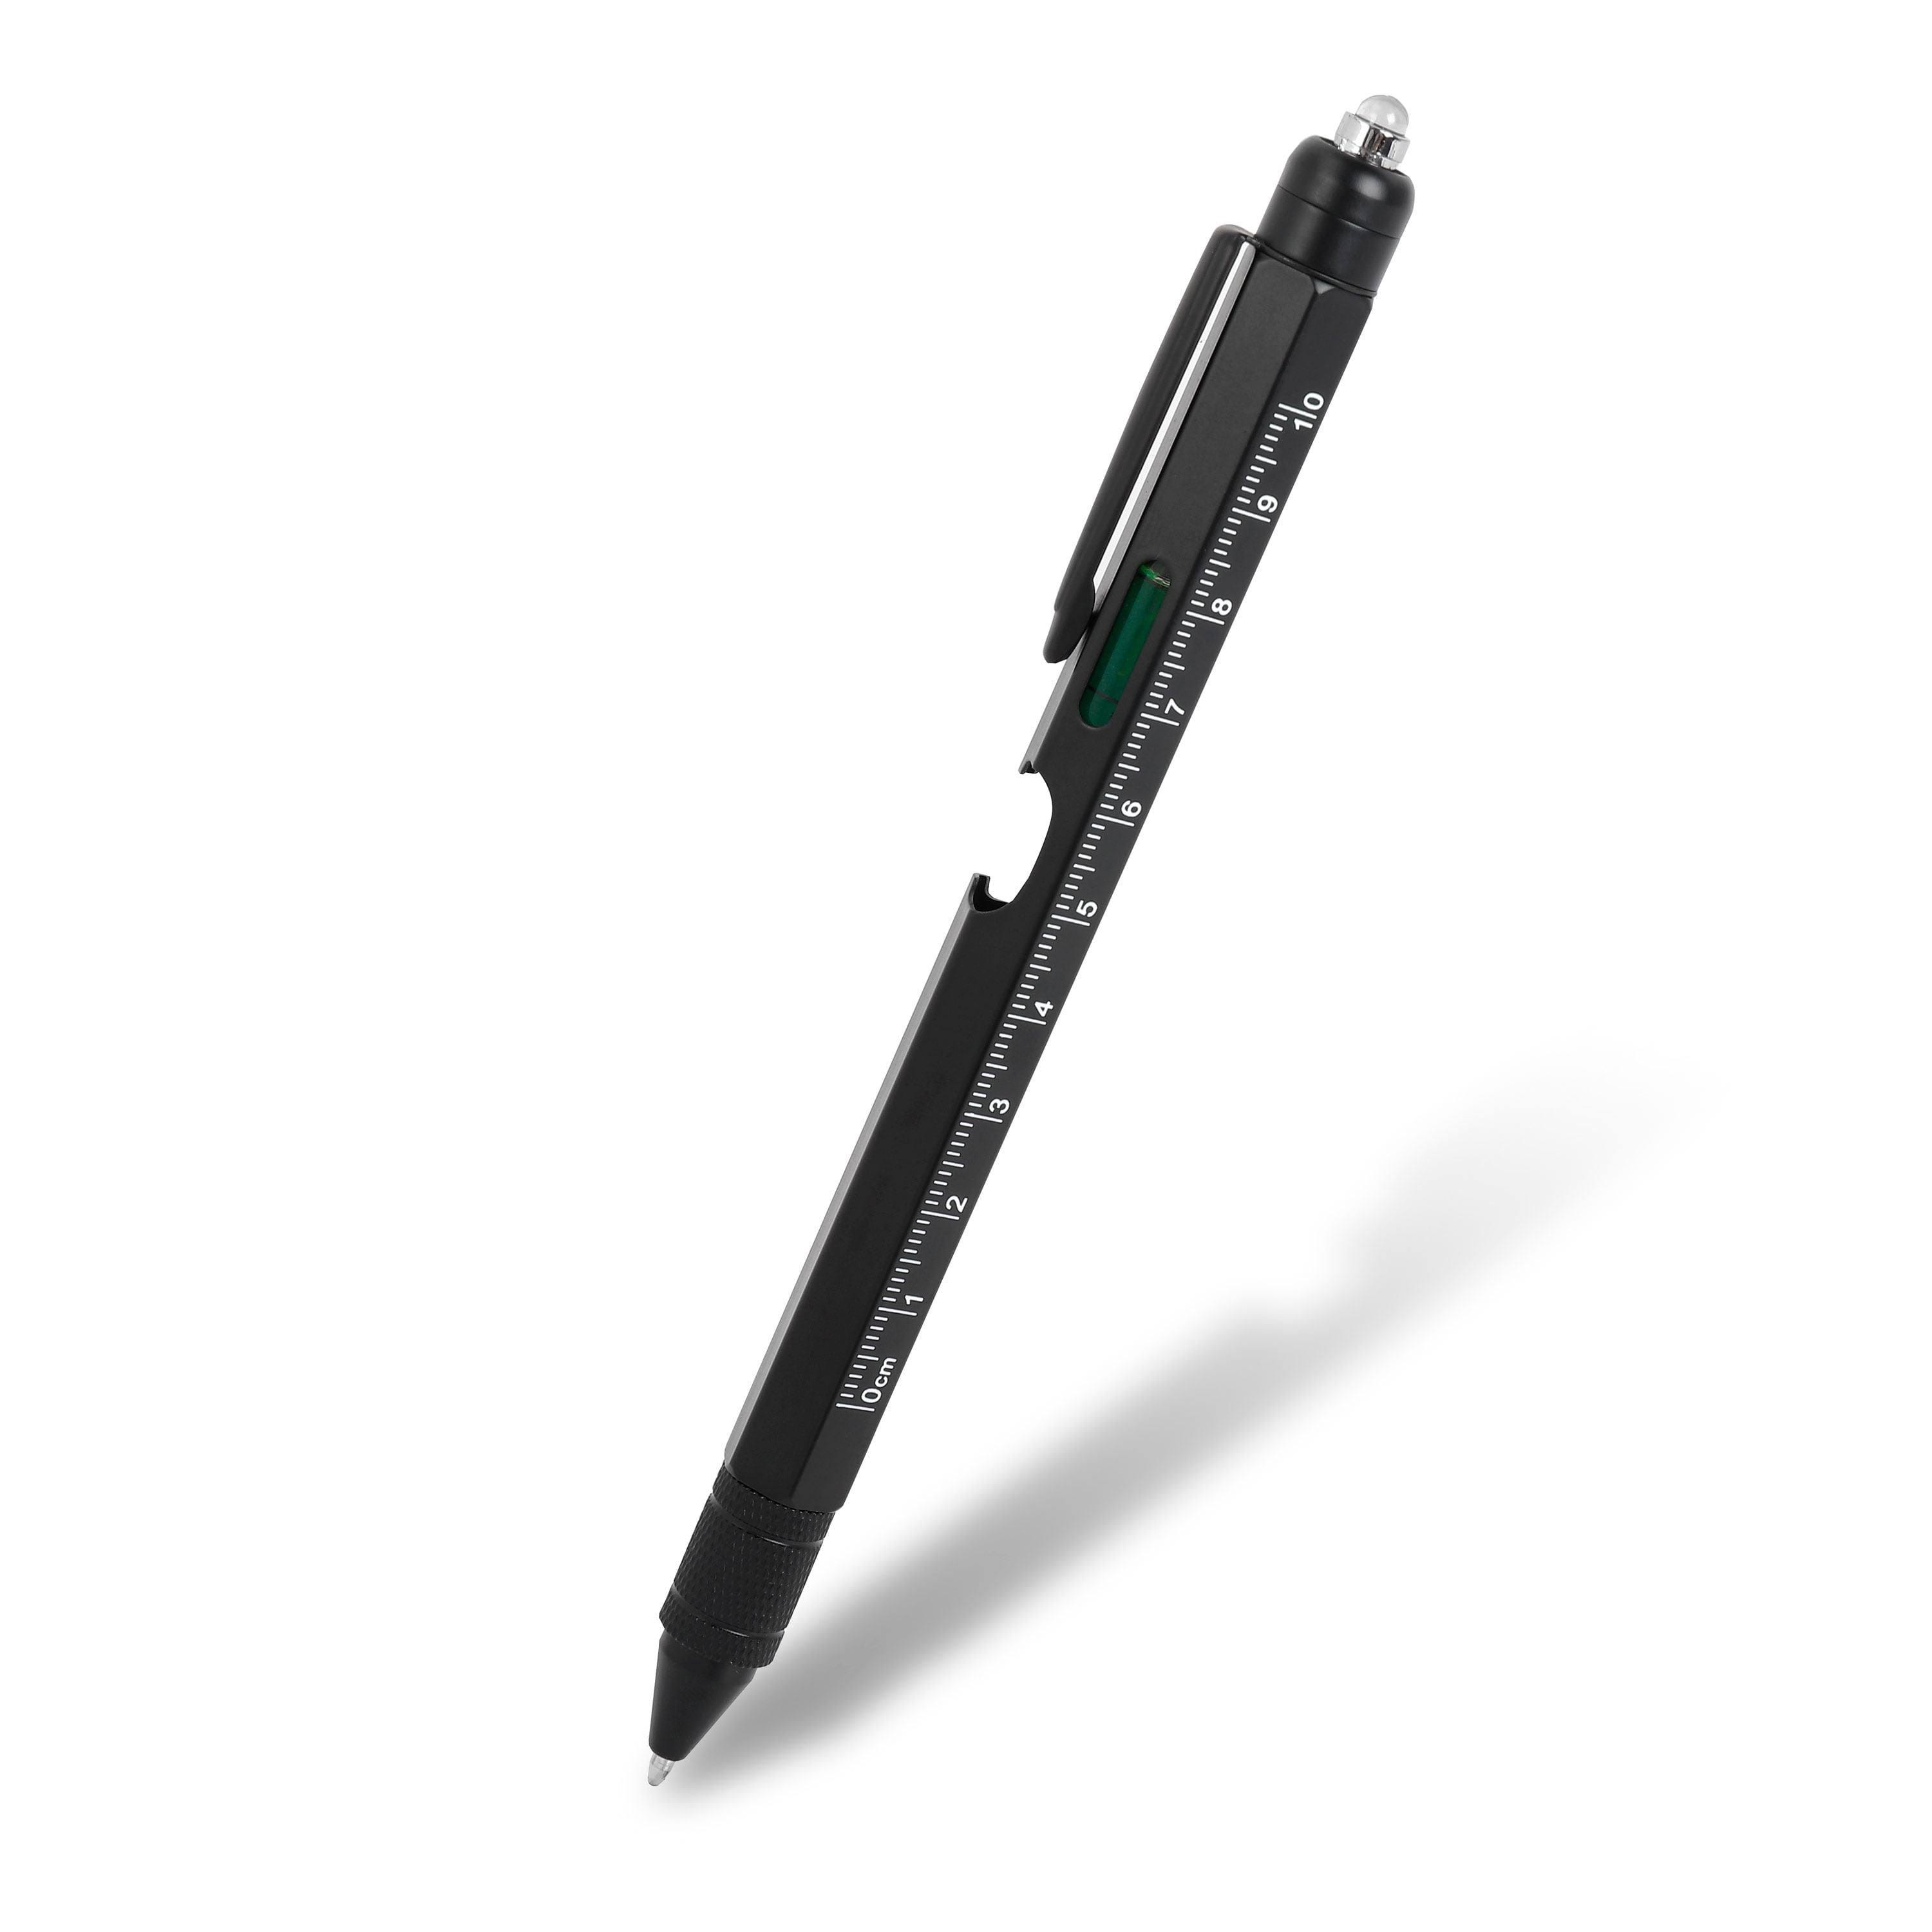 Hyper Tough 8-in-1 Multi-Tool Pen: Versatile Aluminum Pen with 6 Additional Features | Image